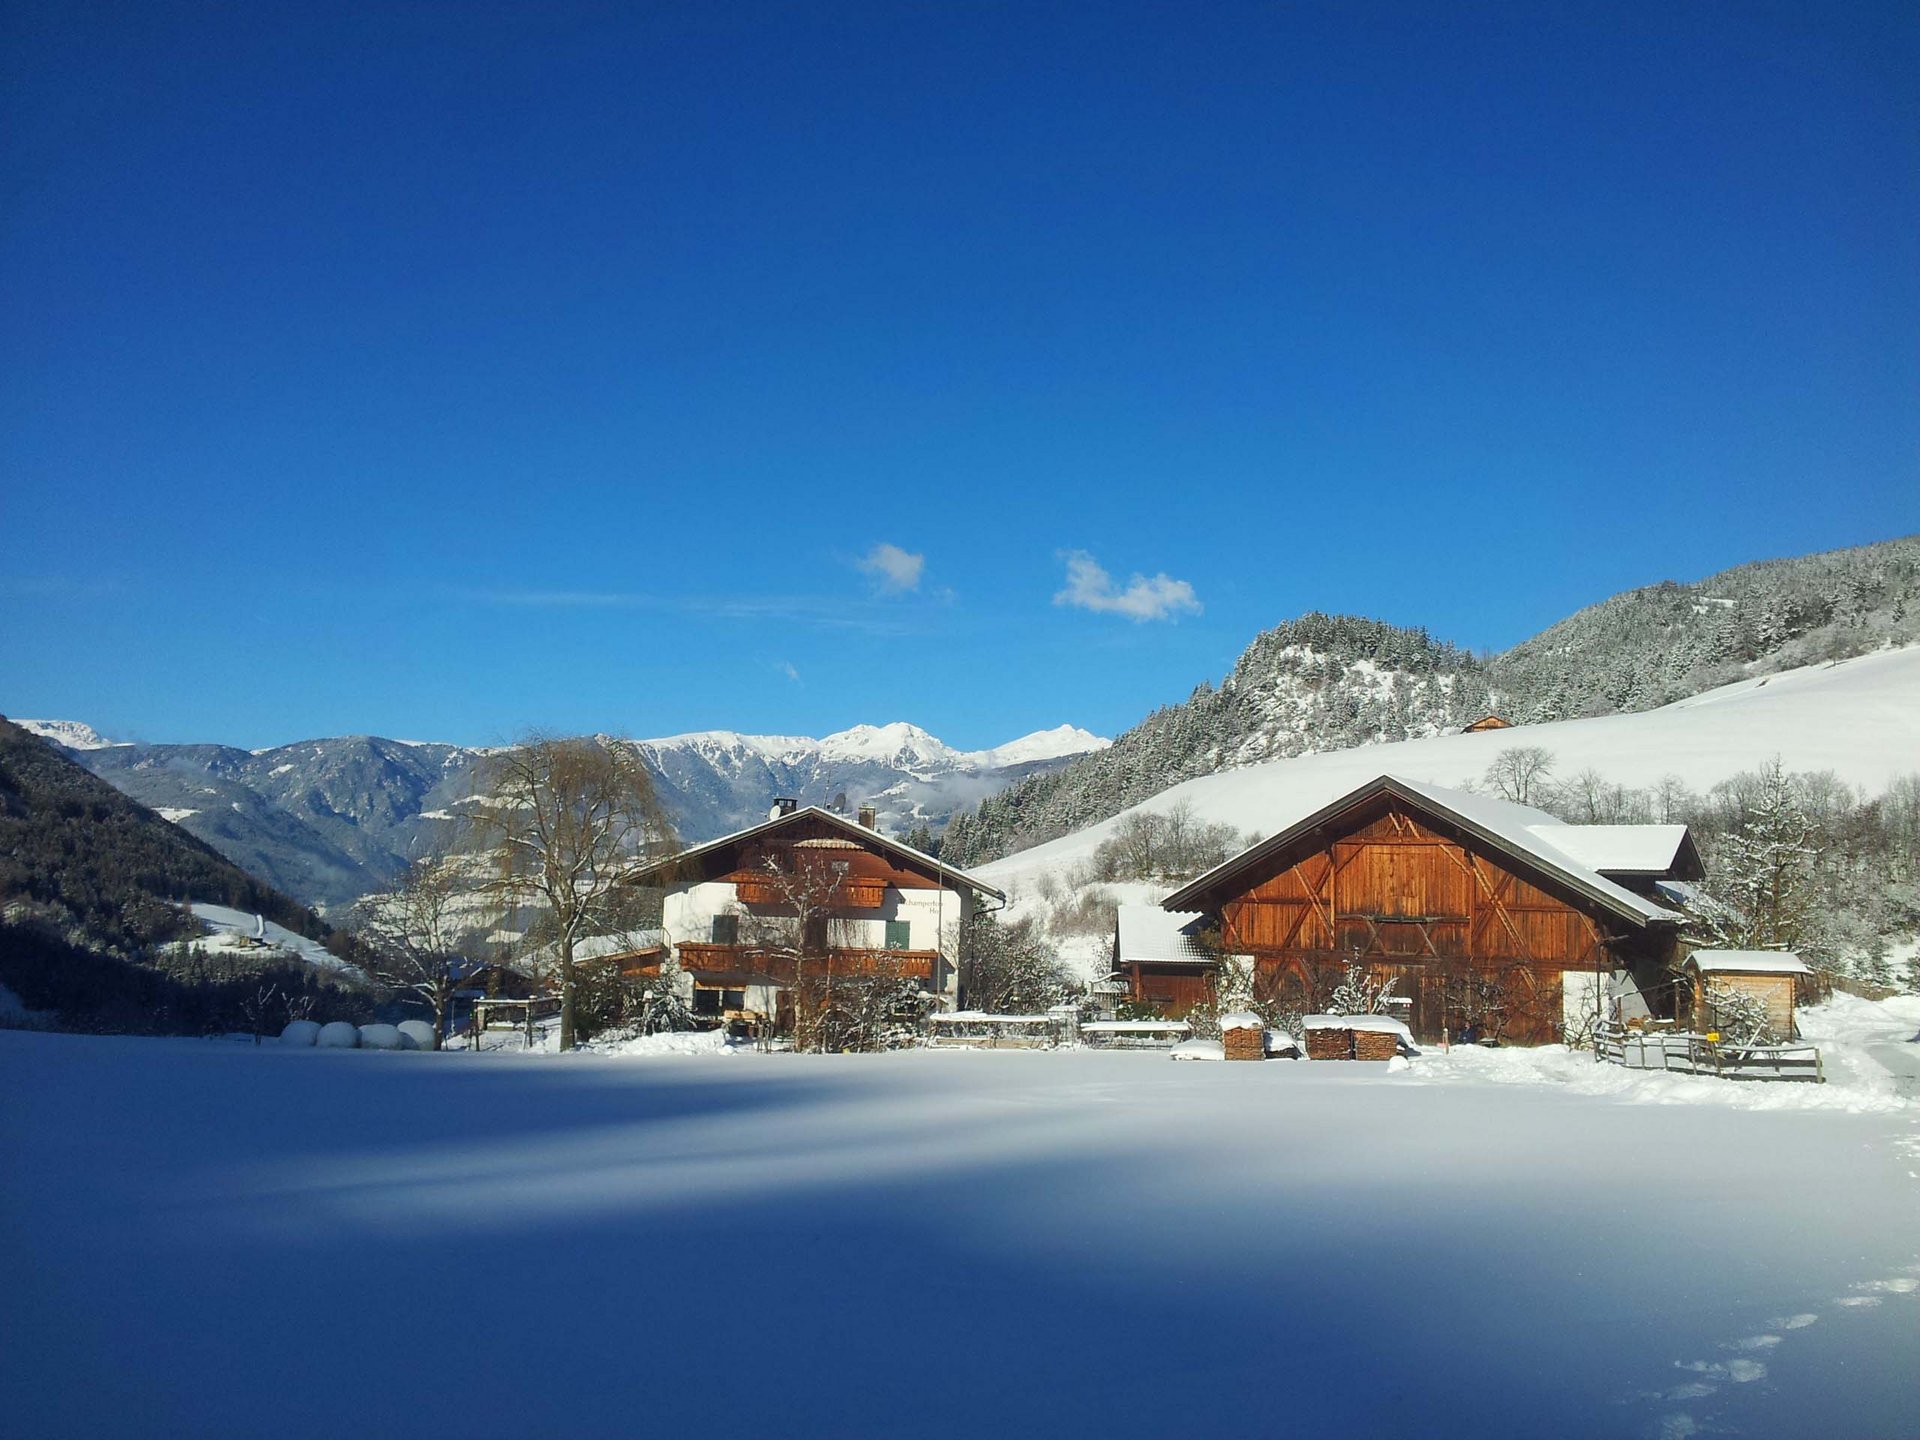 Villnöss – a dream destination in the Dolomites